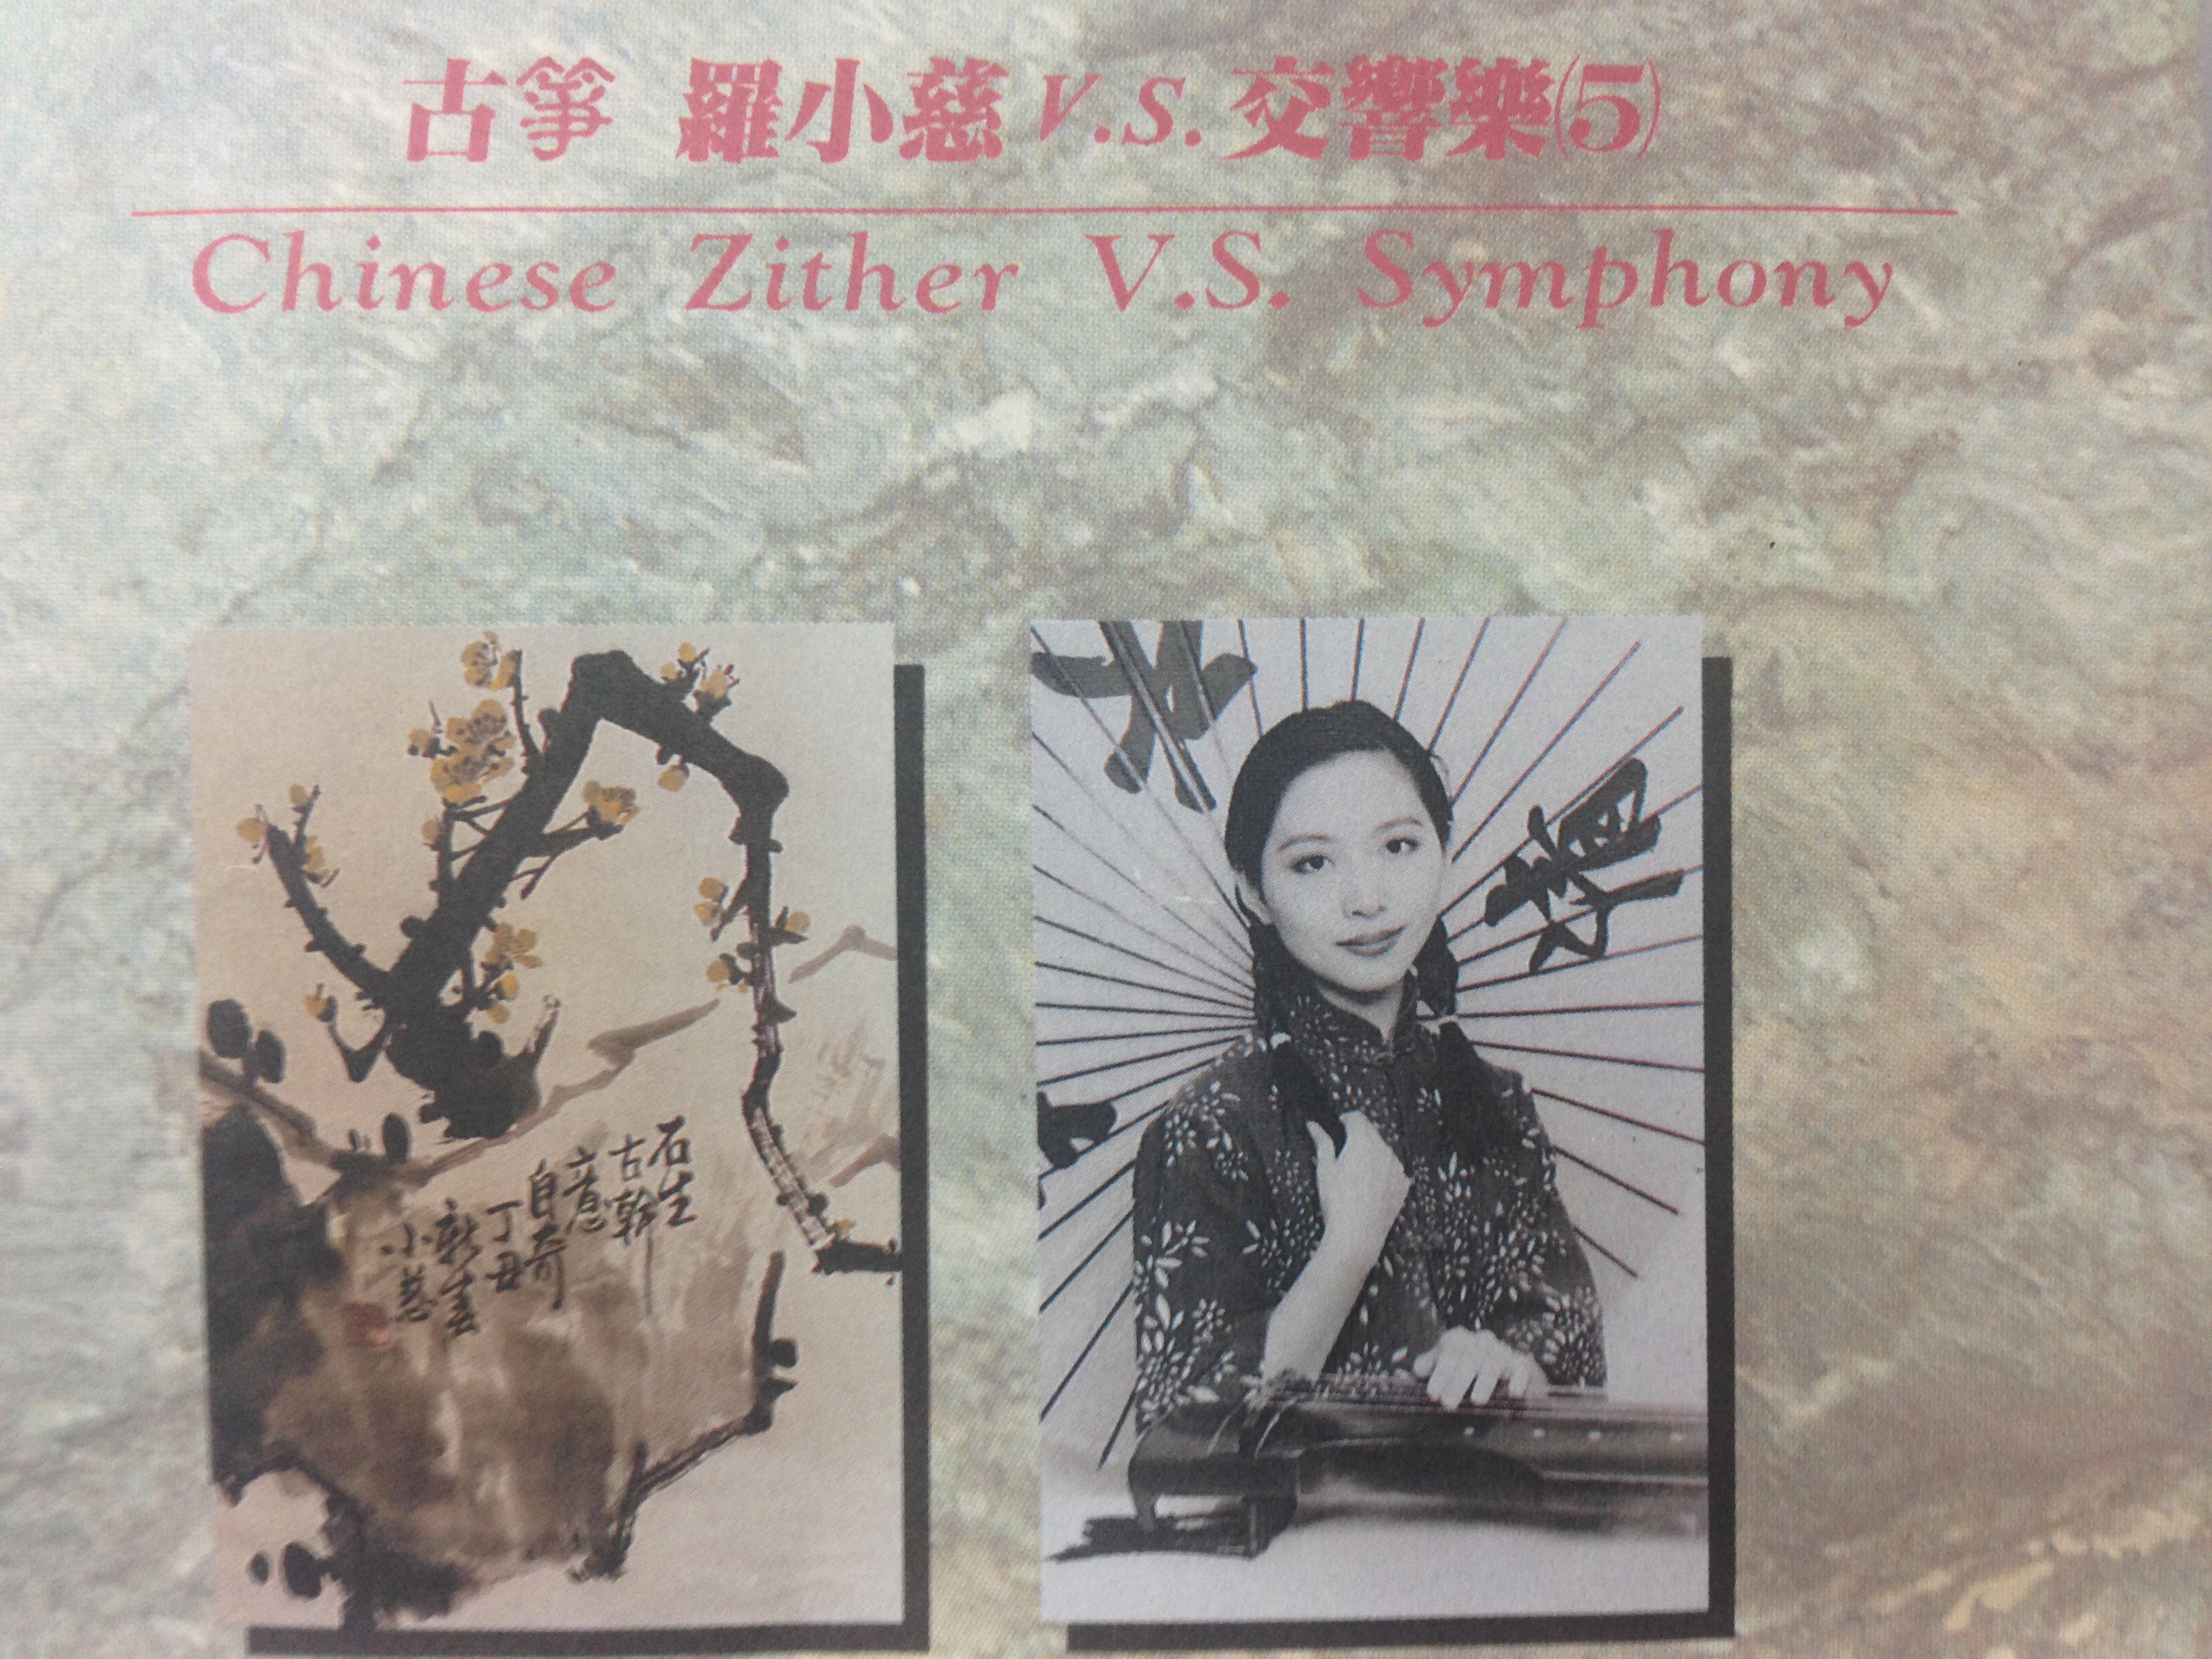 Chinese Zither V.S. Symphony